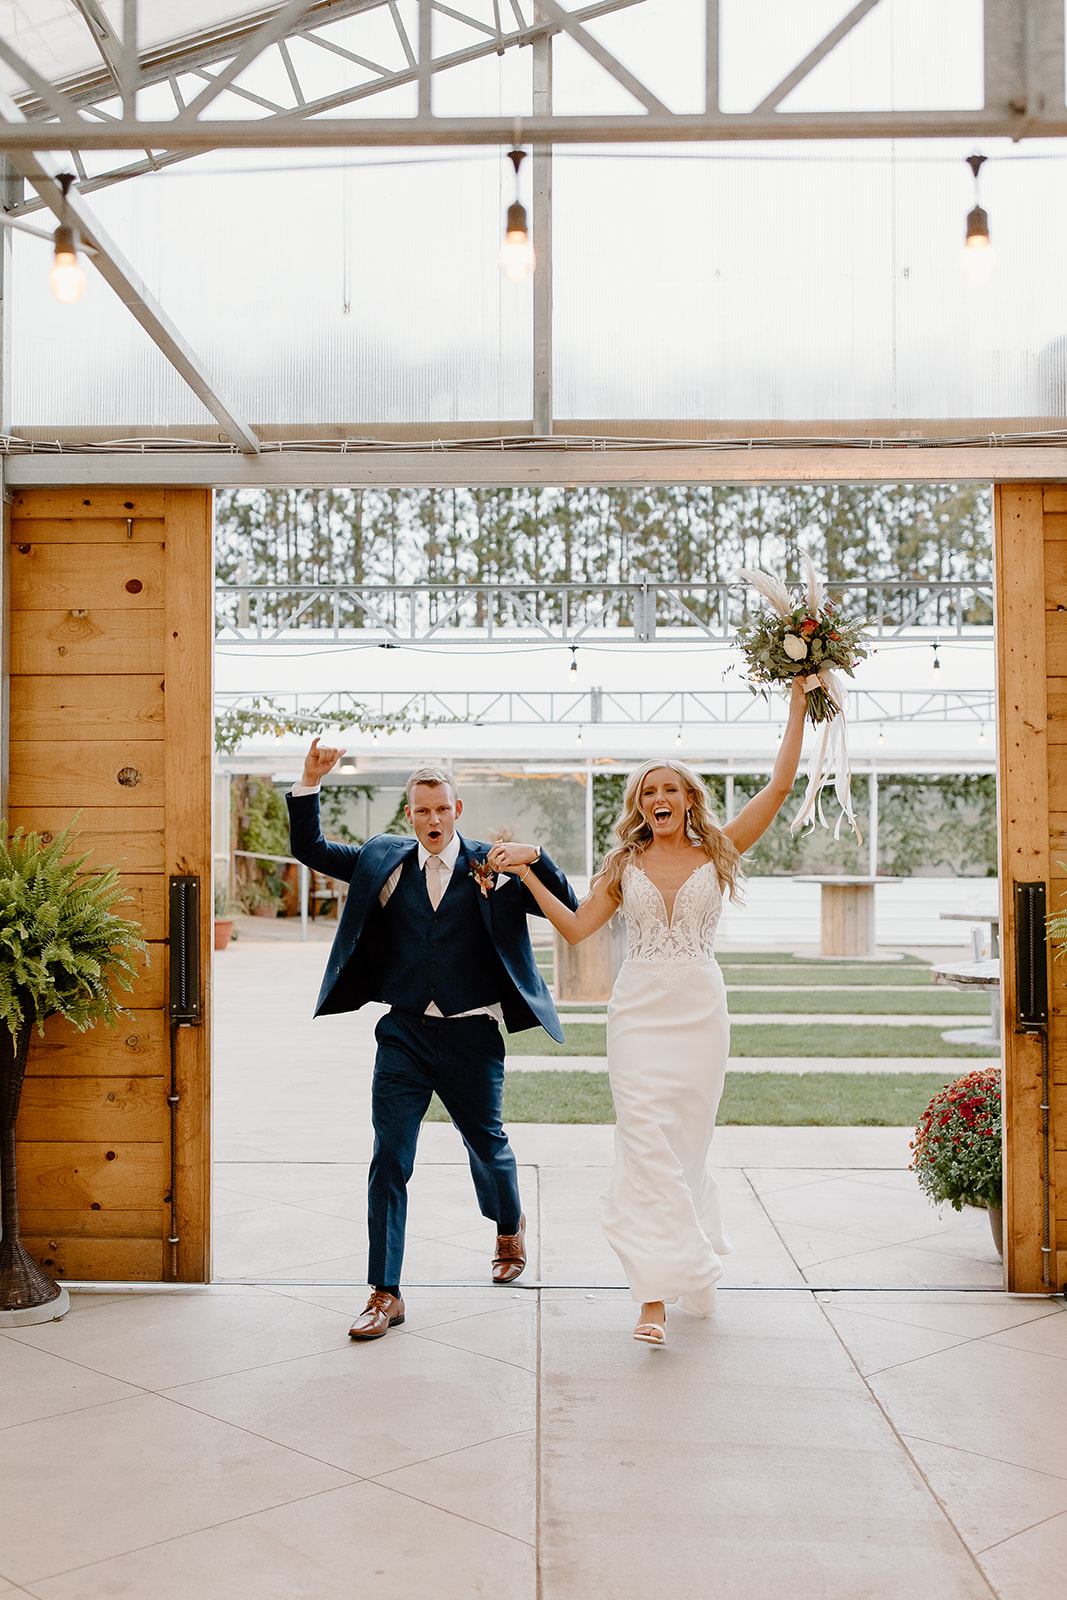 Bride and groom enter into their wedding reception